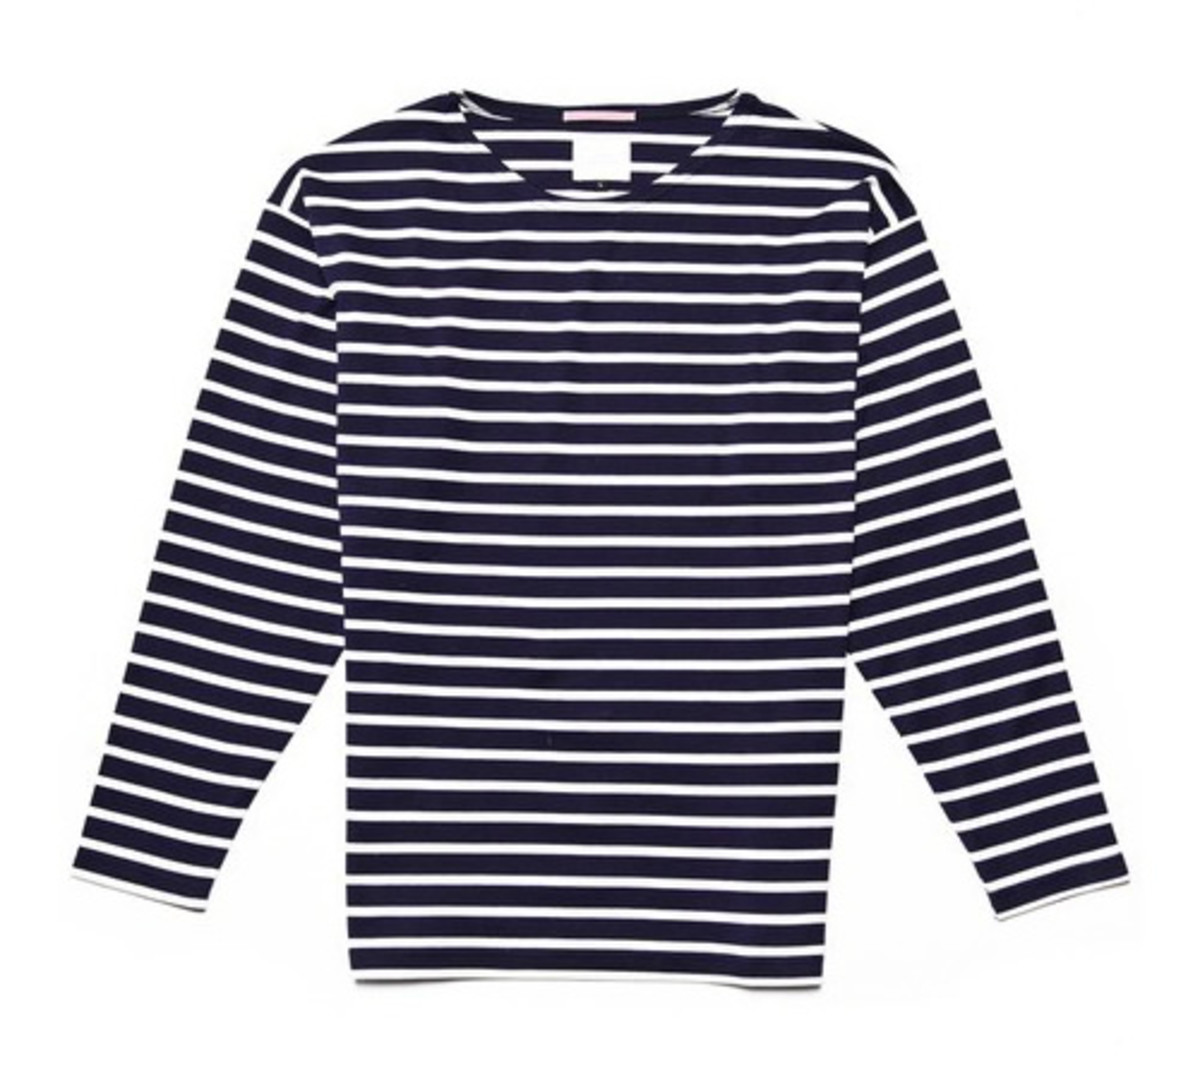 Apolis Breton Striped Shirt - Acquire